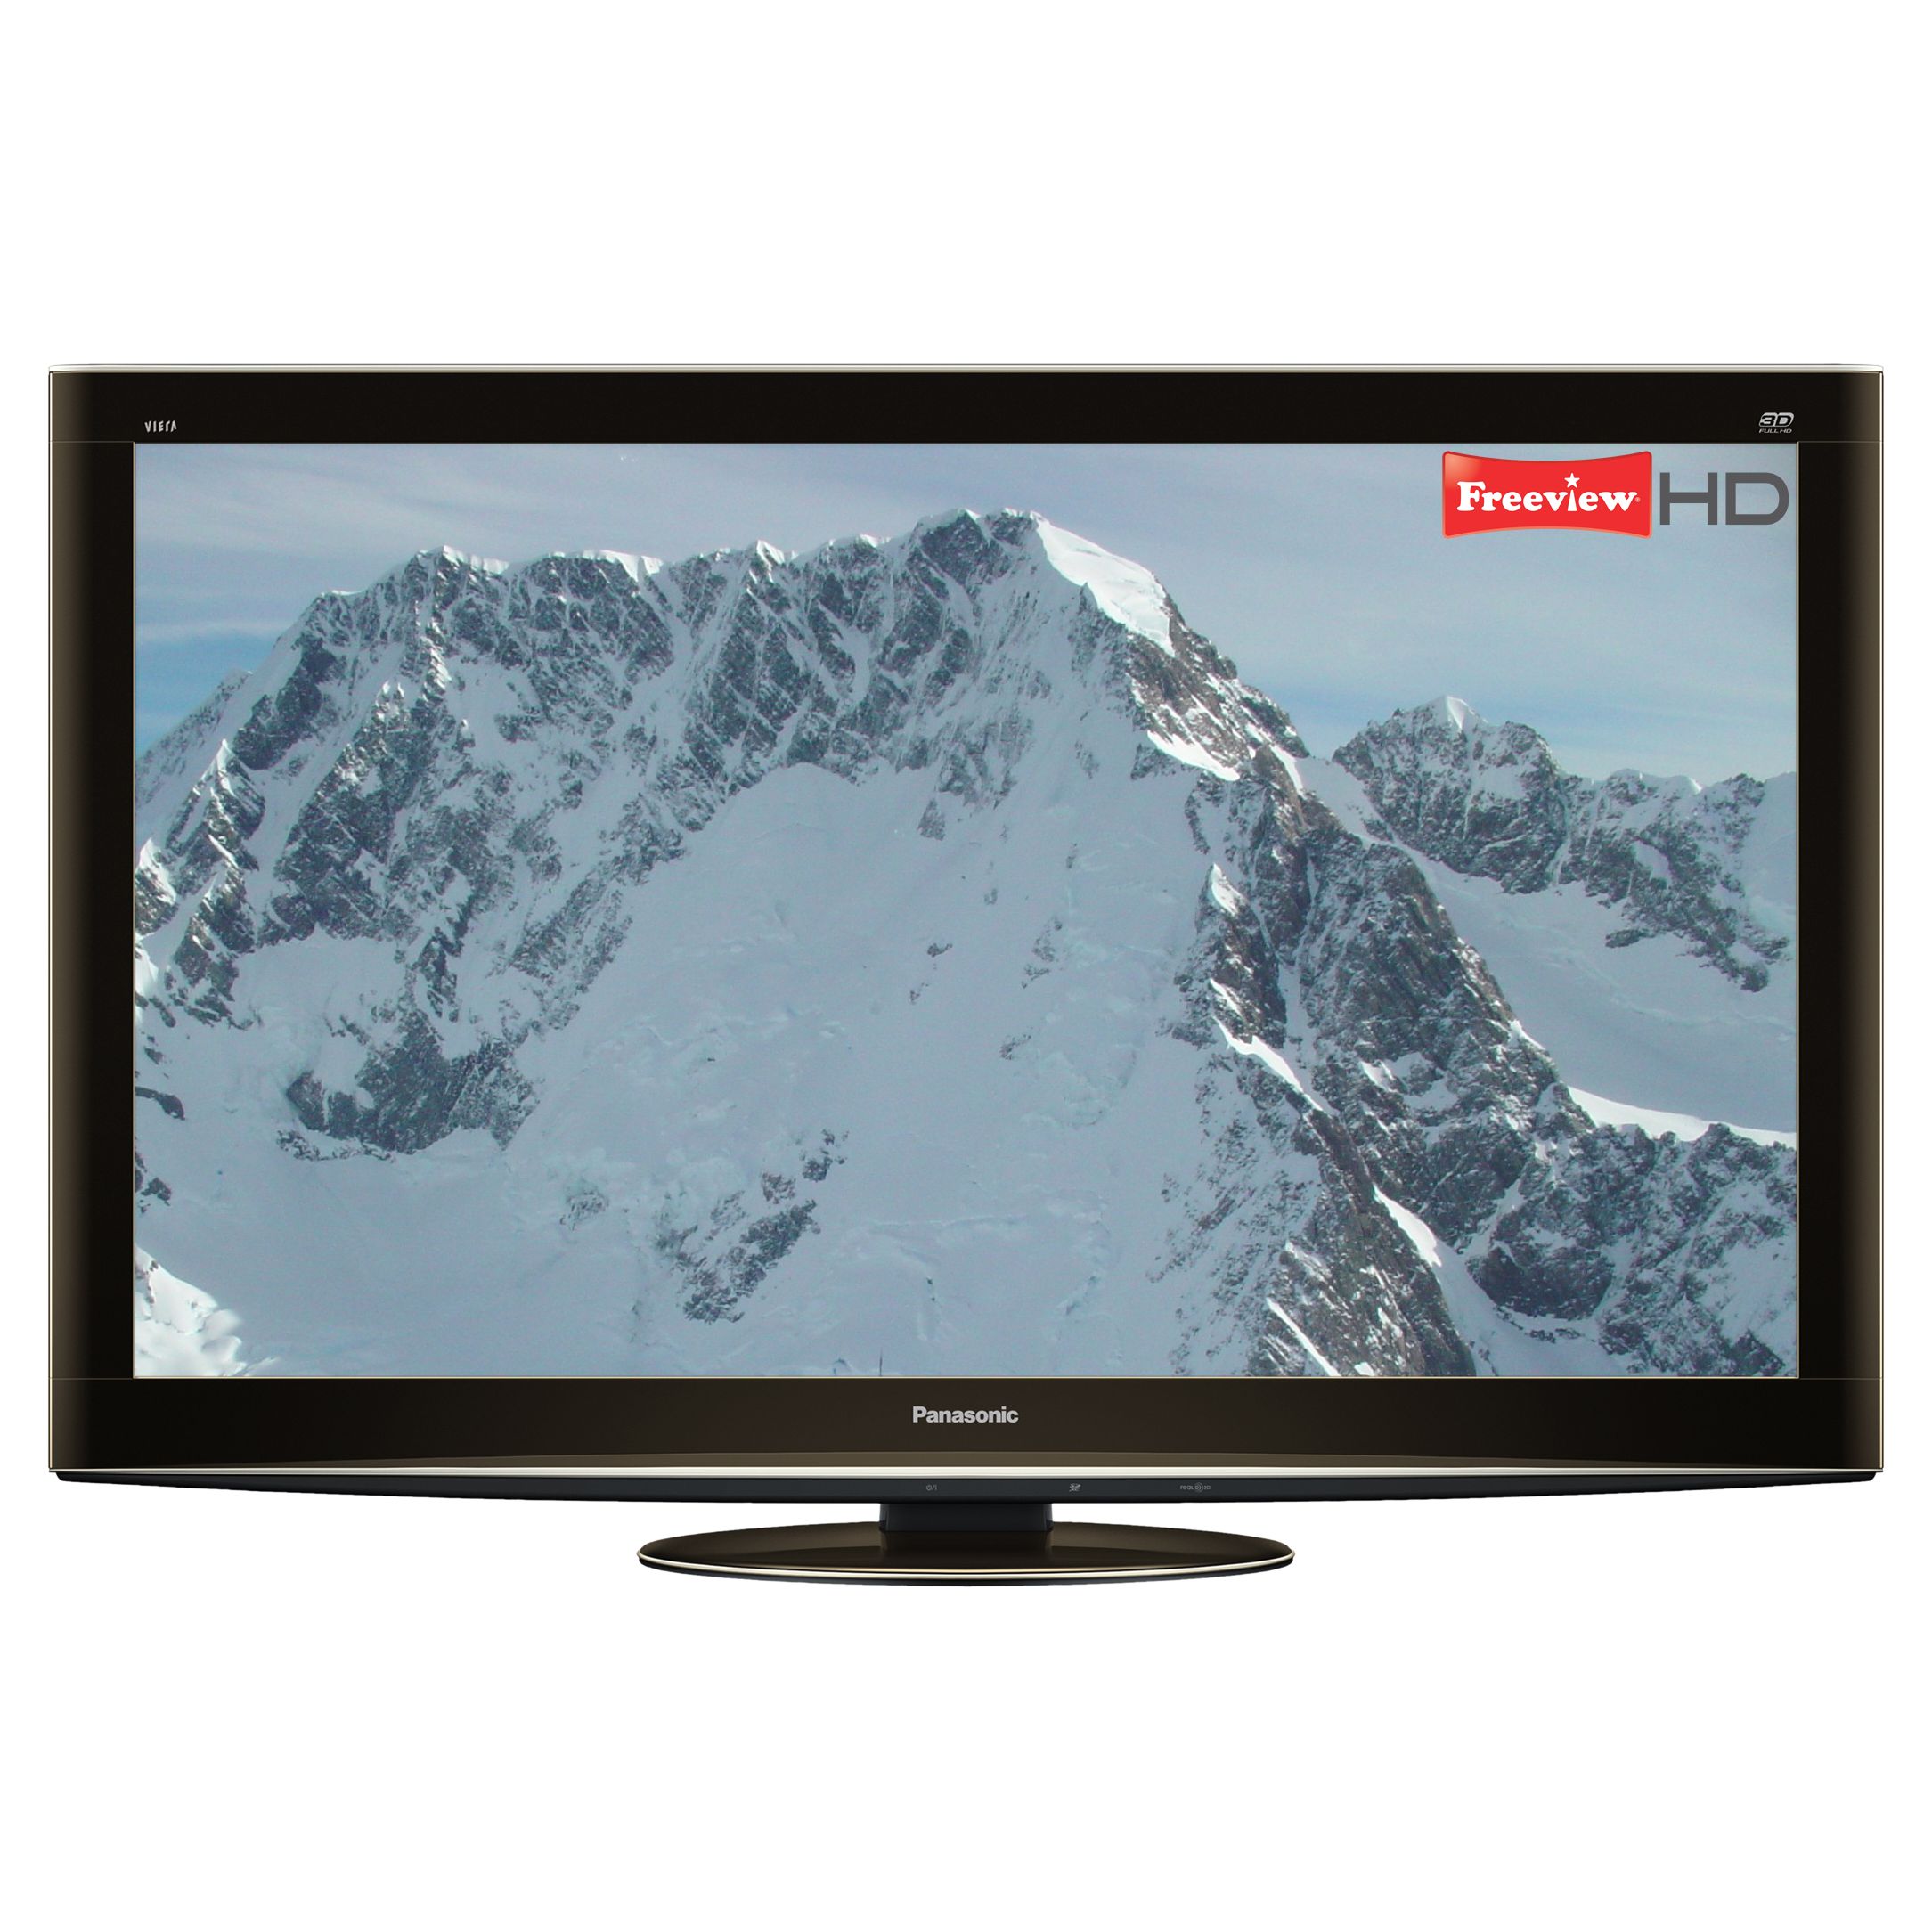 Panasonic Viera TX-P50VT20B Plasma HD 1080p 3D TV, 50" with Built-in freesat & Freeview HD at JohnLewis